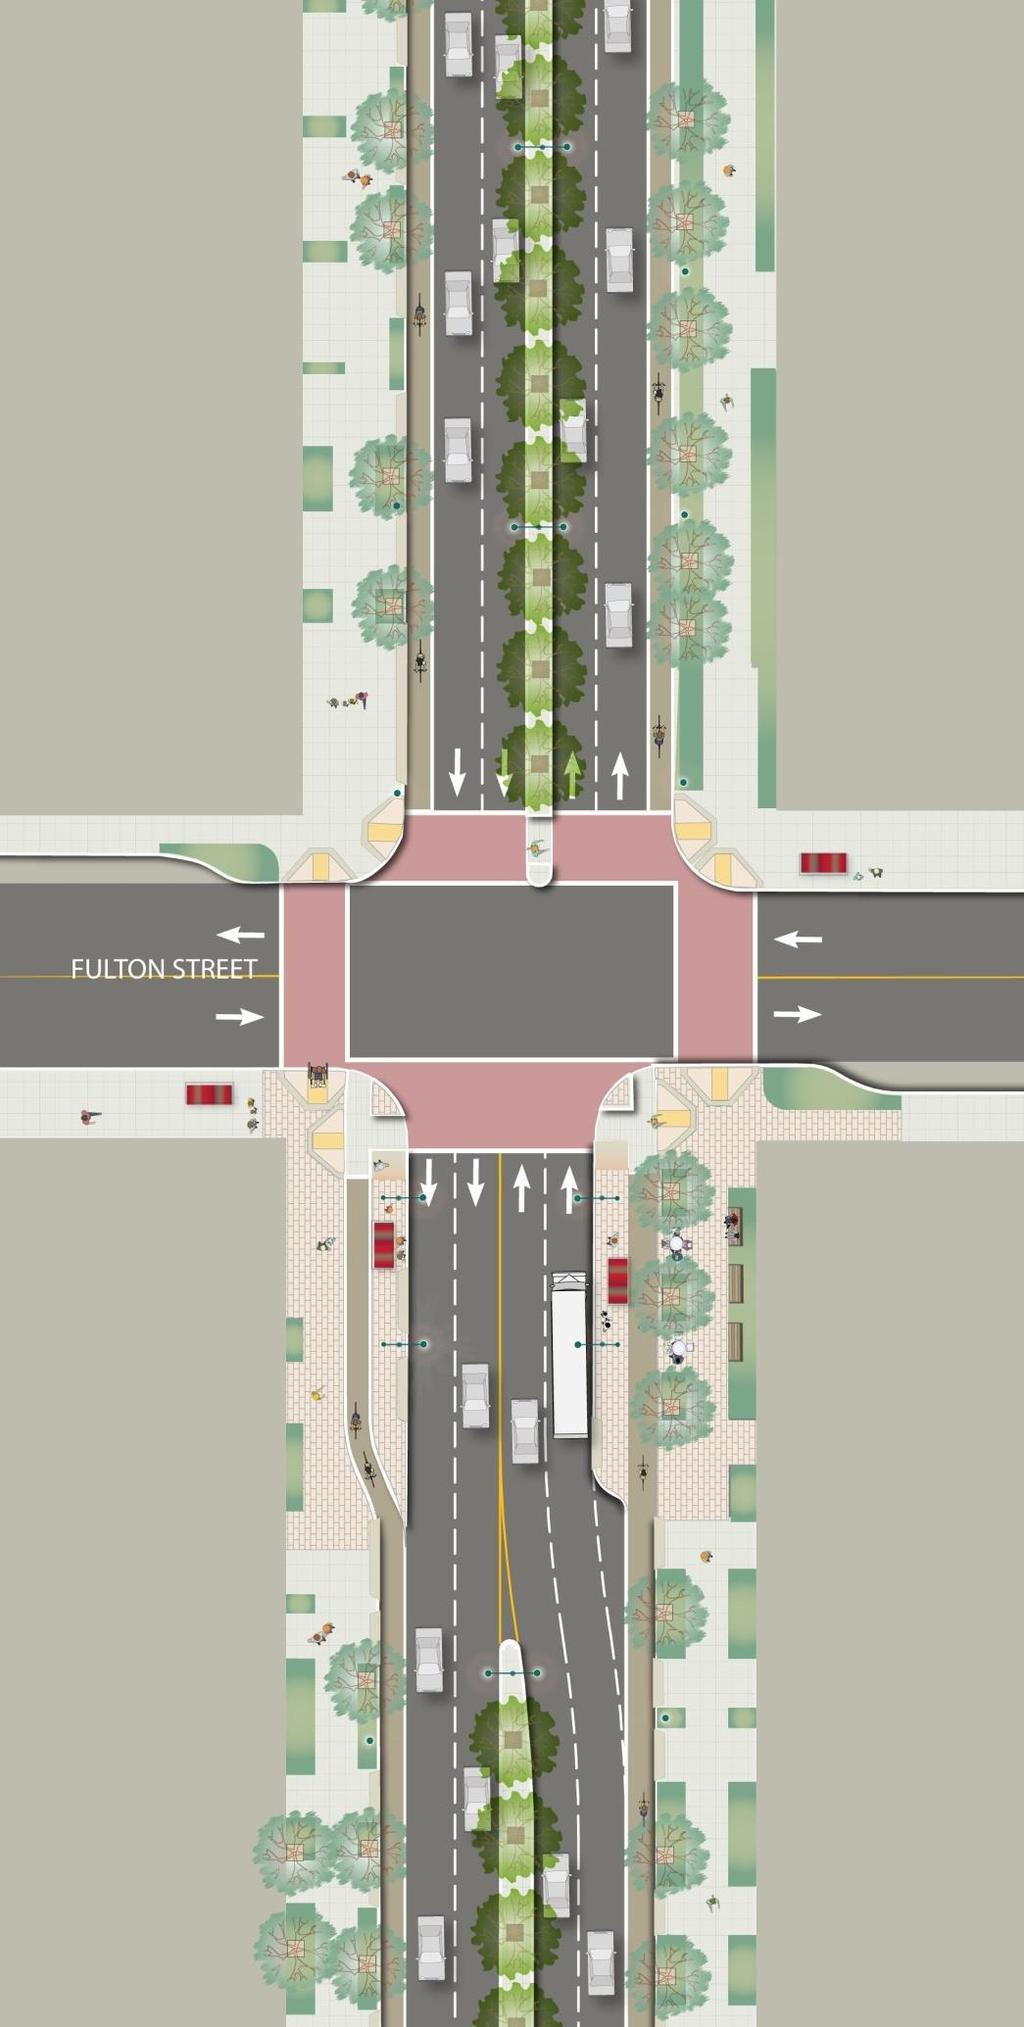 The Boulevard Plan